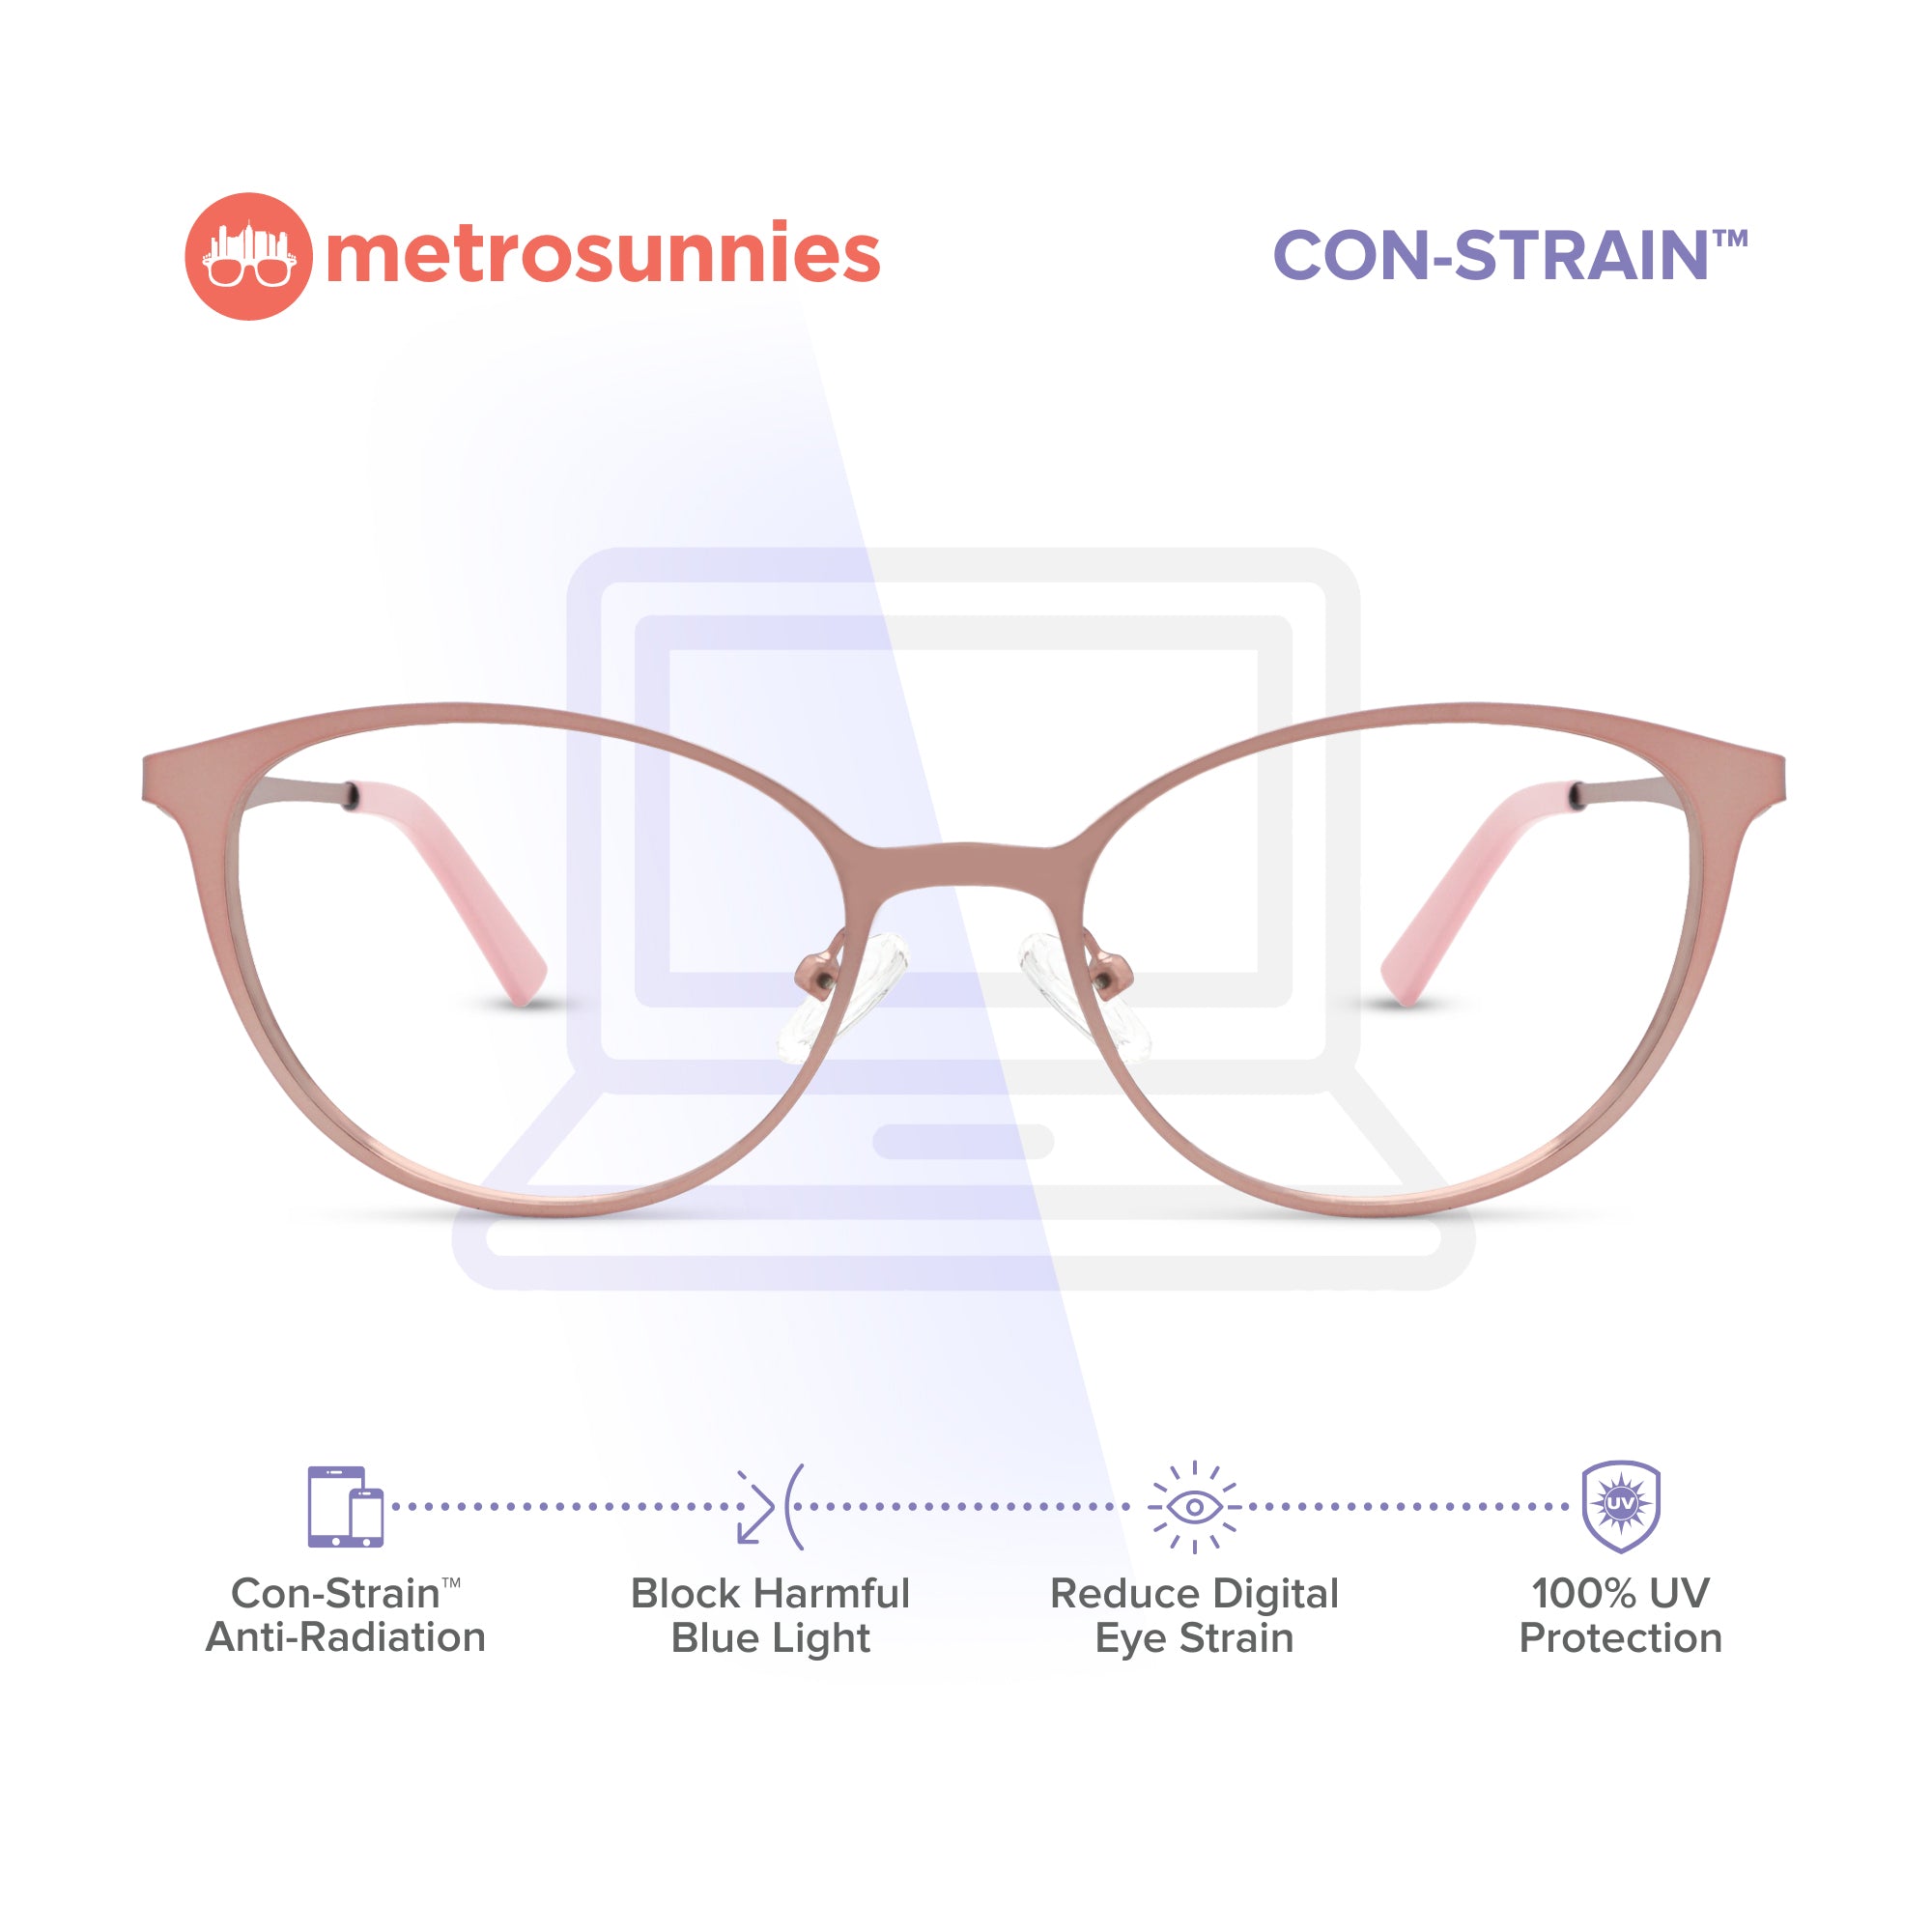 MetroSunnies Sylvia Specs (Pink) / Con-Strain Blue Light / Anti-Radiation Computer Eyeglasses